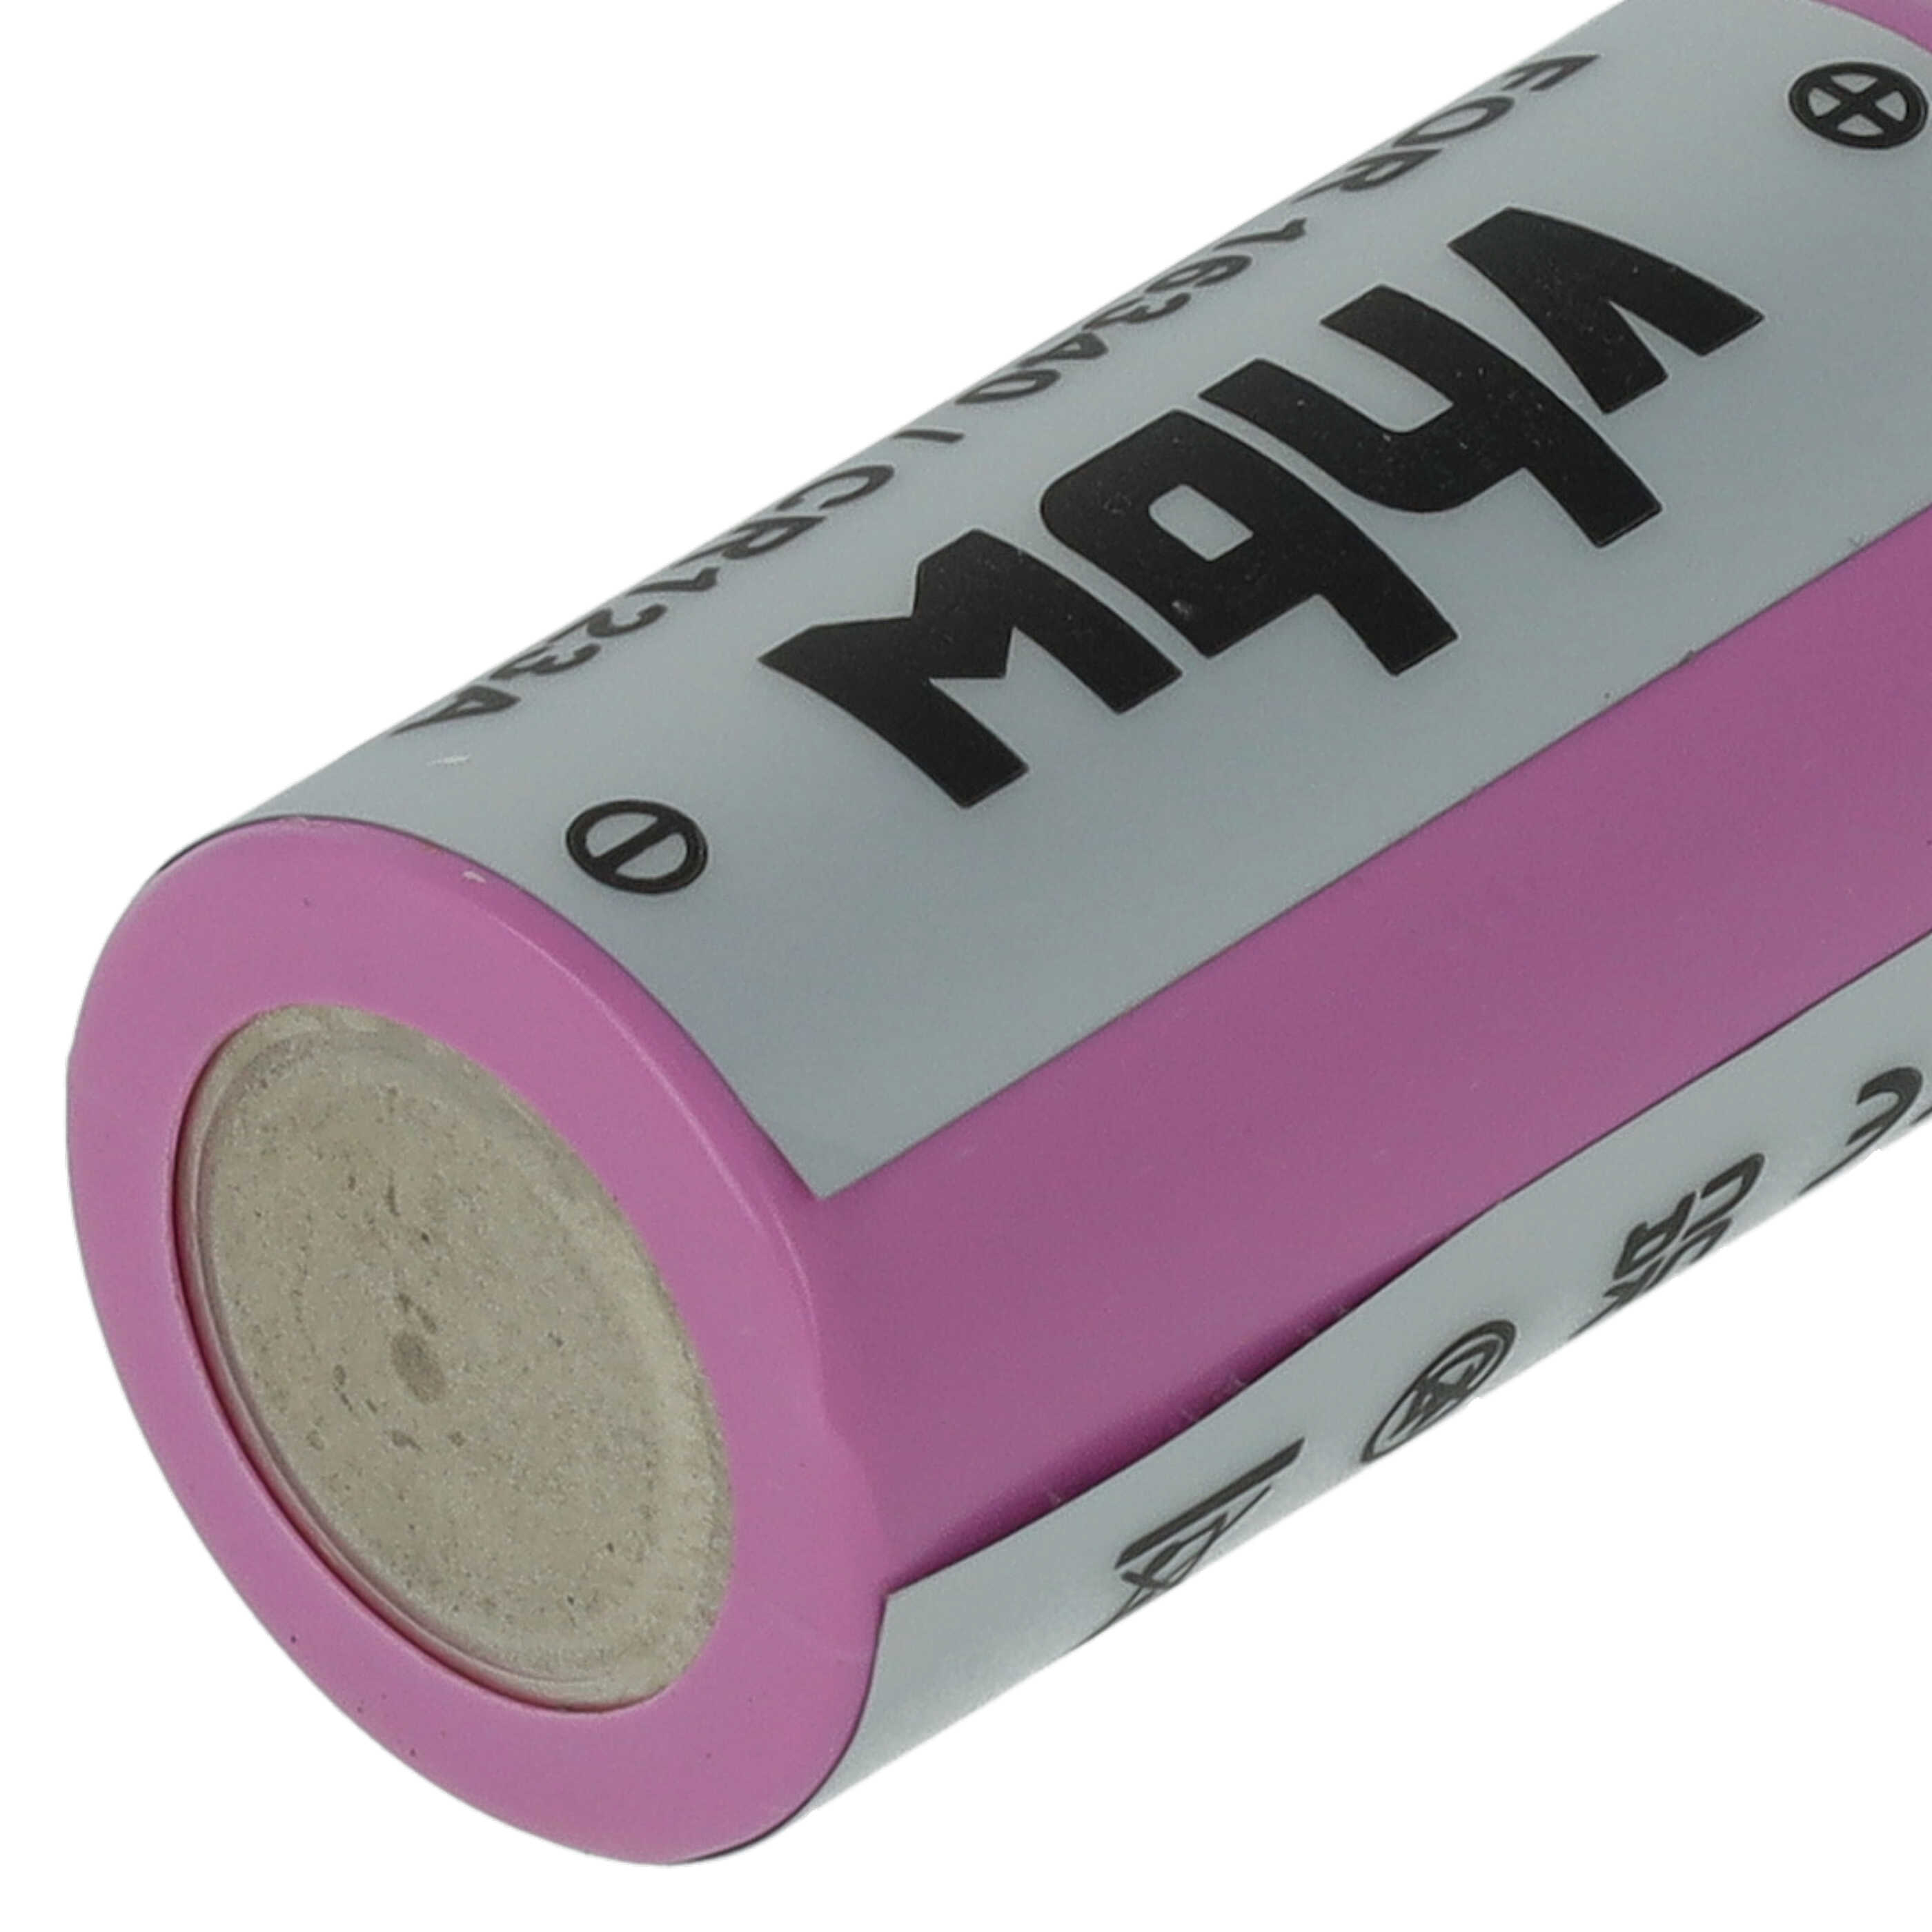 Batteria (10x pezzo) universale - 800mAh 3,6V Li-Ion